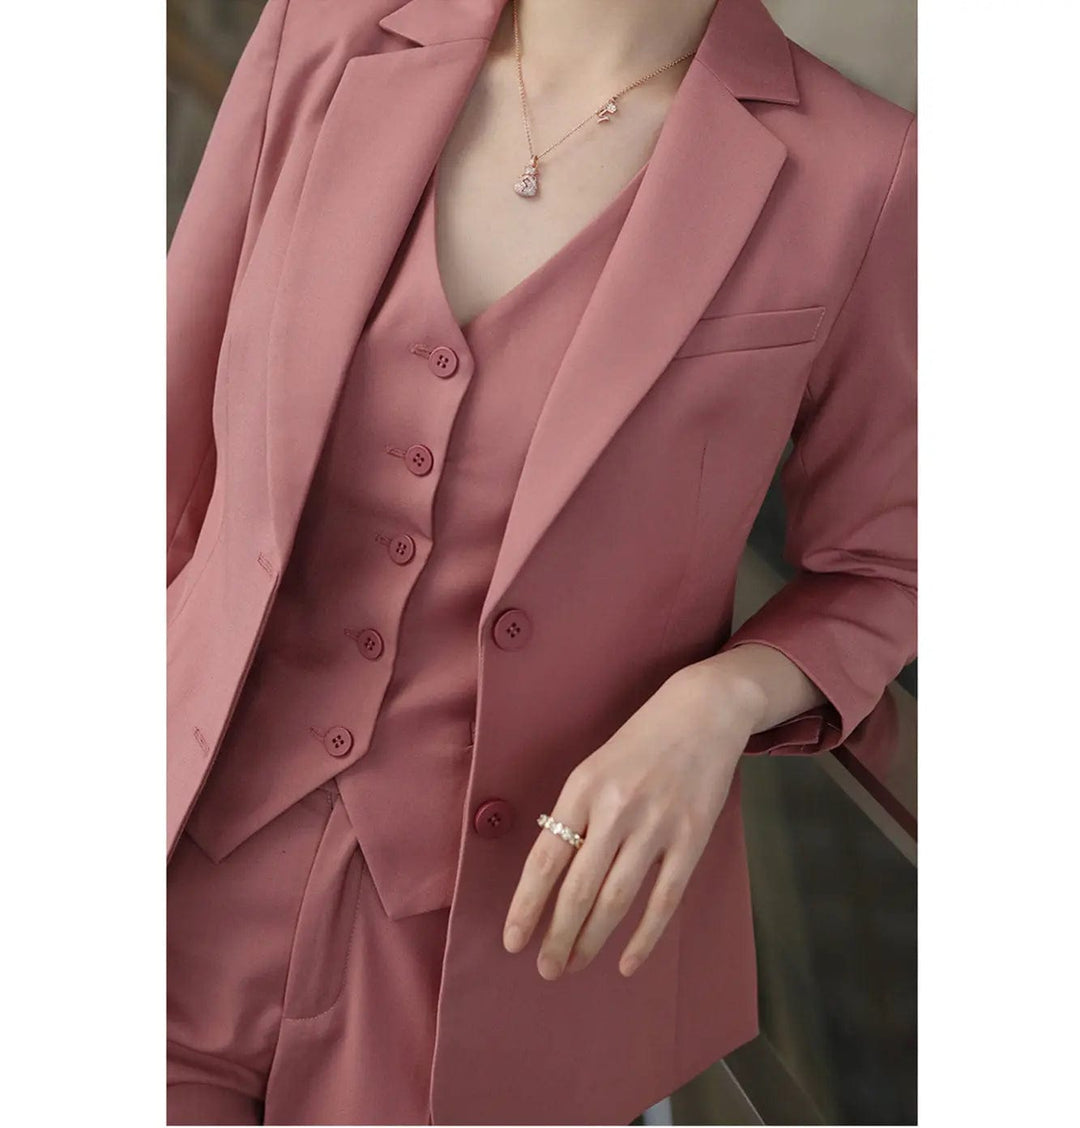 solovedress Formal 3 Pieces Women Suit Solid Peak Lapel Blazer